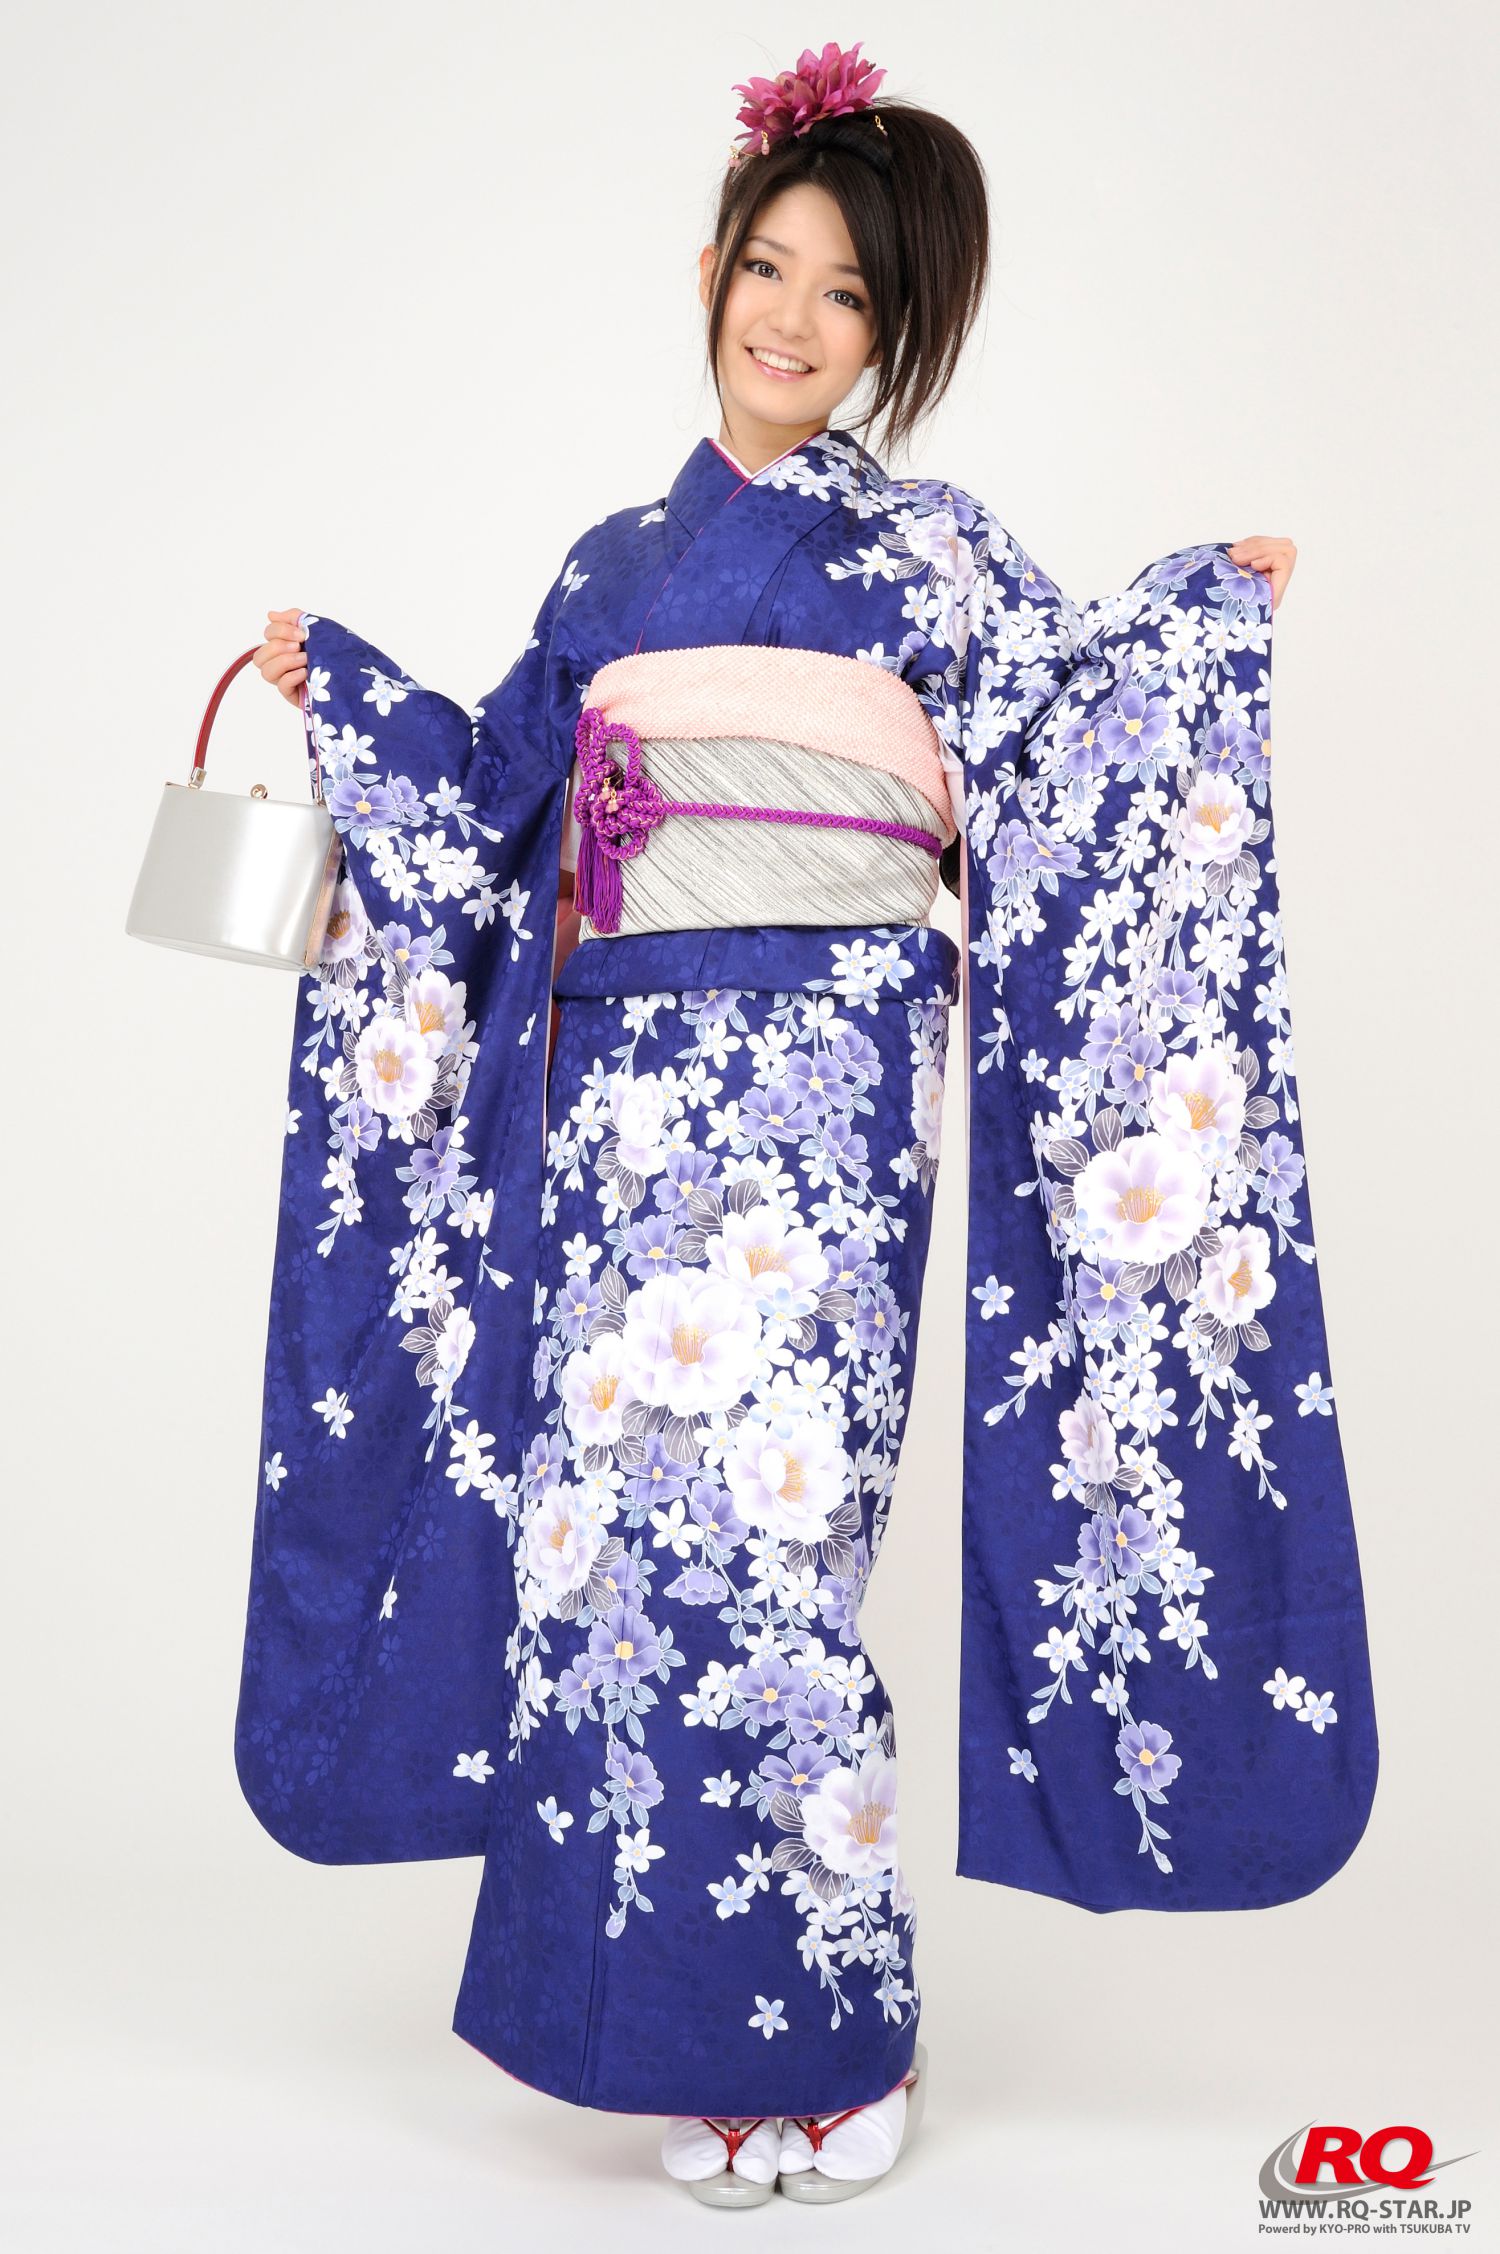 [Rq-star] No.00068 Guasaki, Great New Year, Kimono – Happy New Year